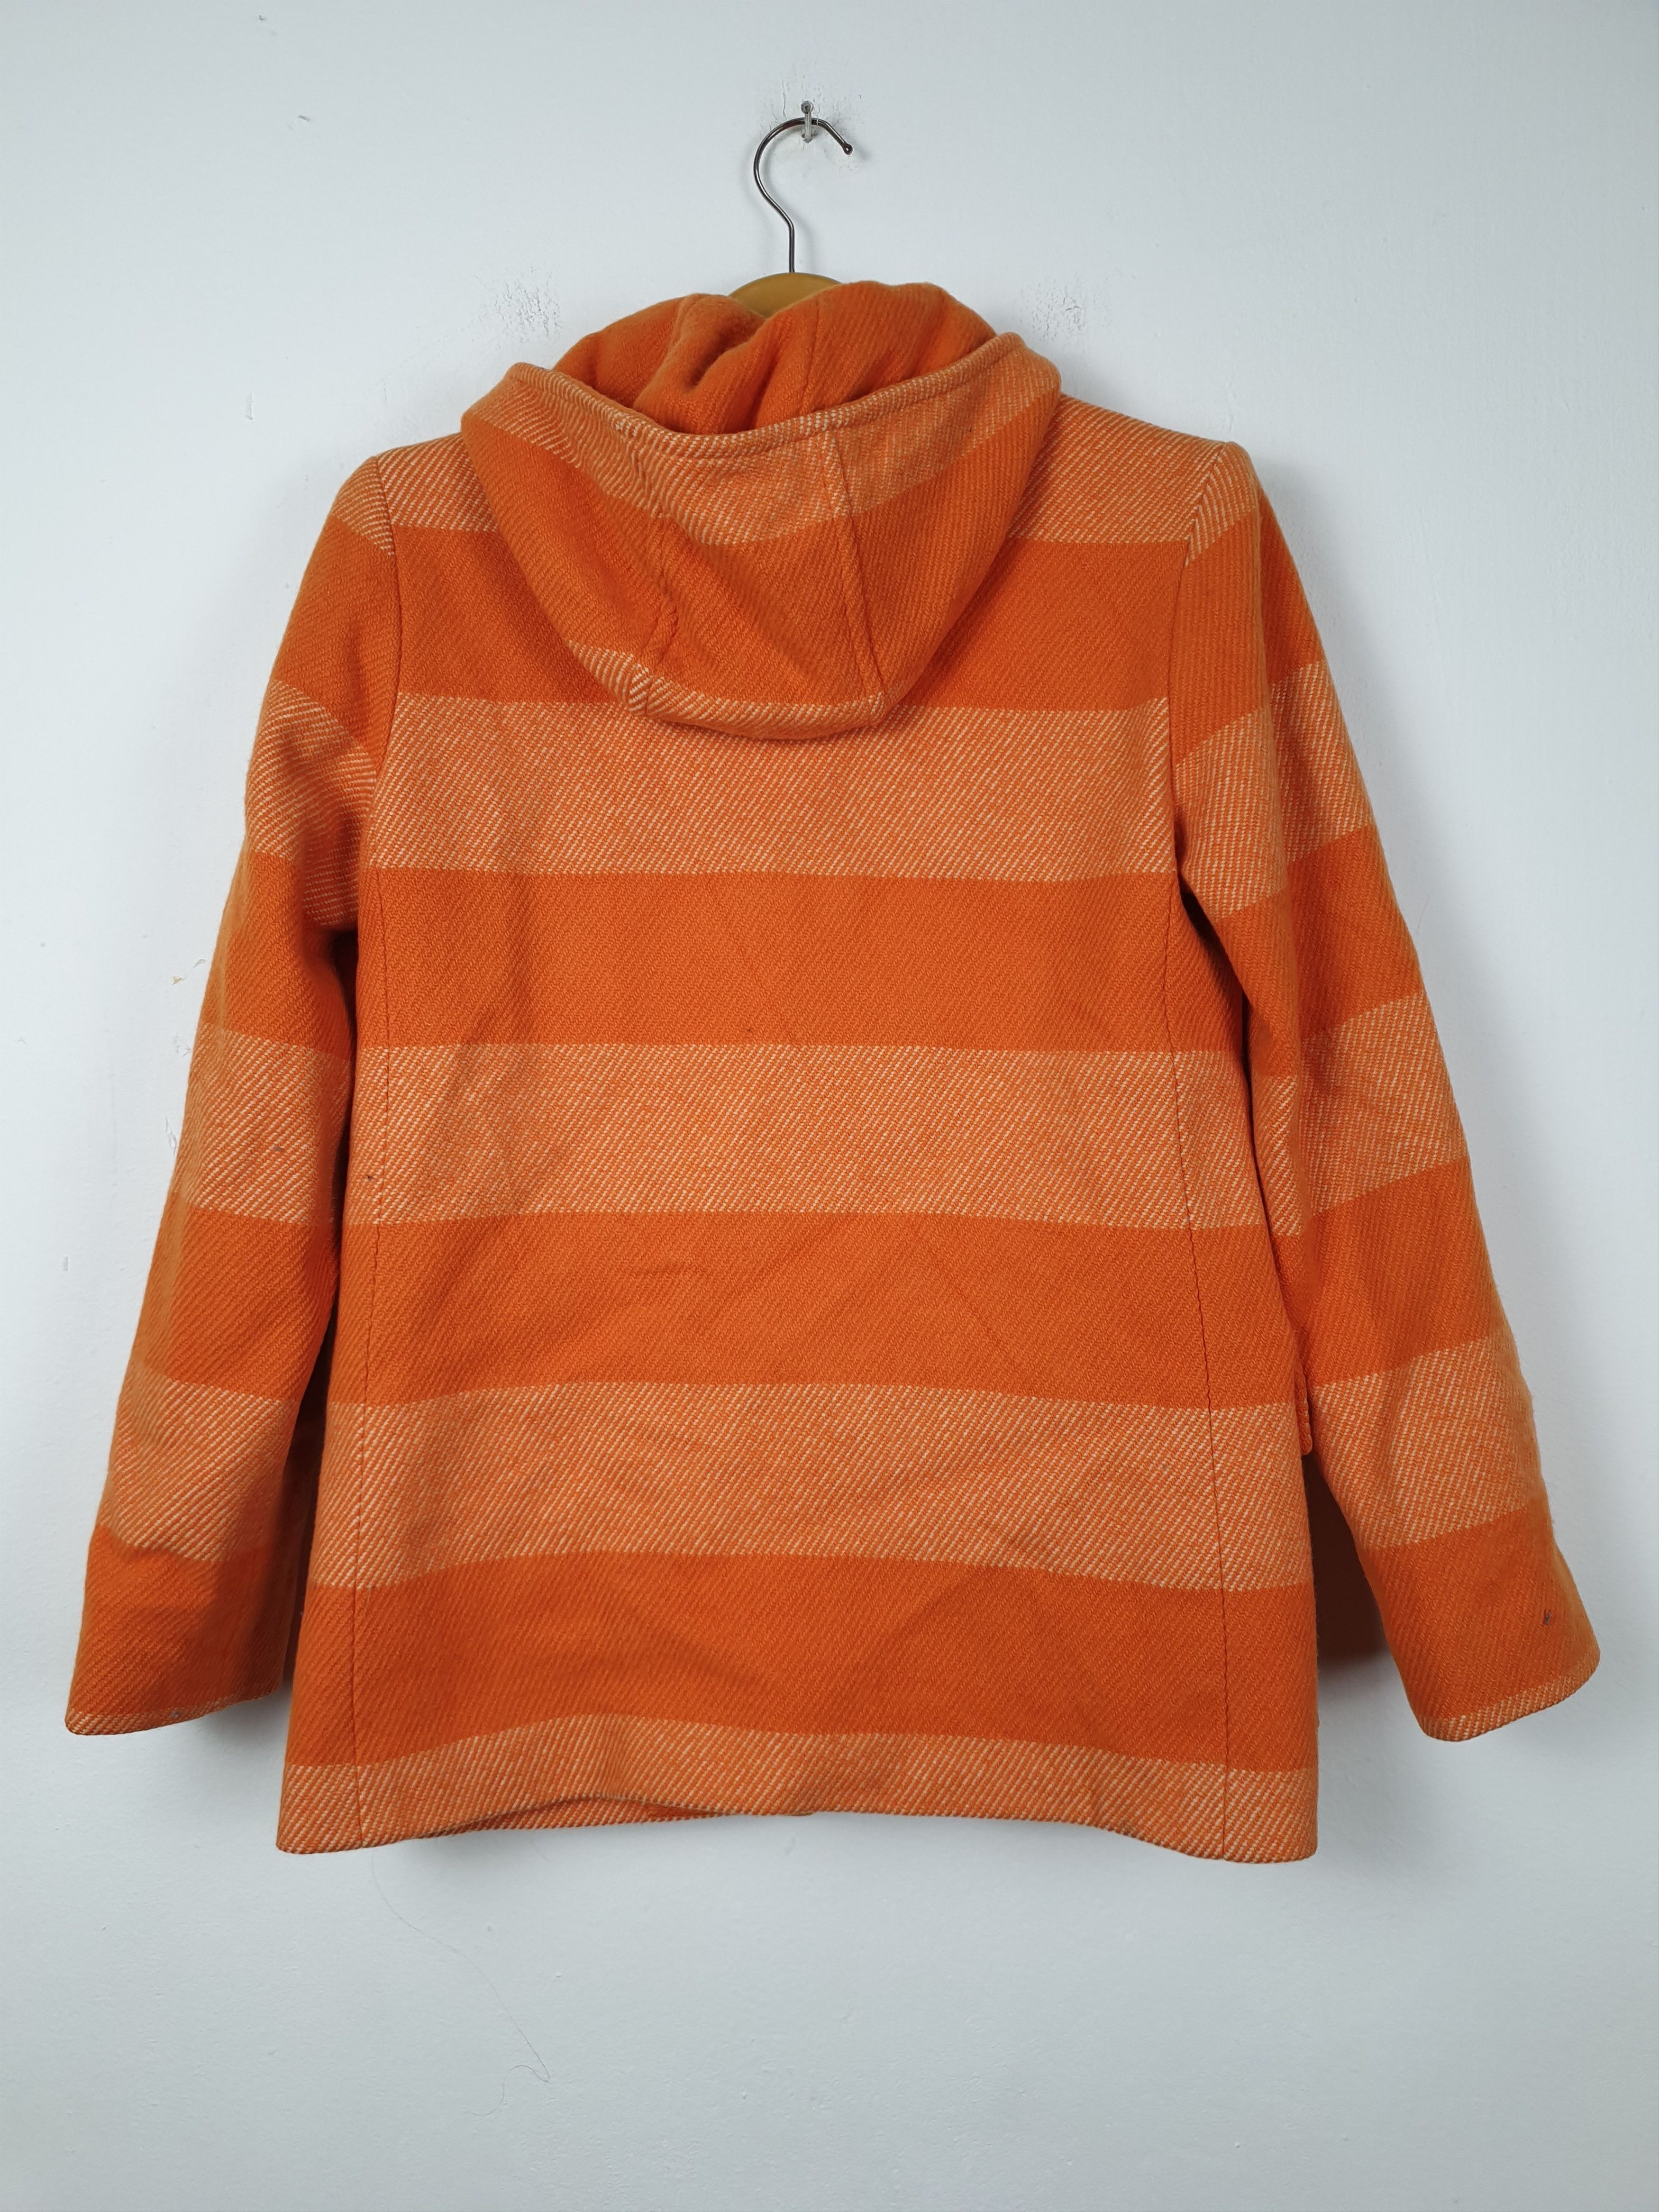 Vintage Vintage 90's COURREGES Wool Striped Hoodie Jacket Size US S / EU 44-46 / 1 - 3 Thumbnail